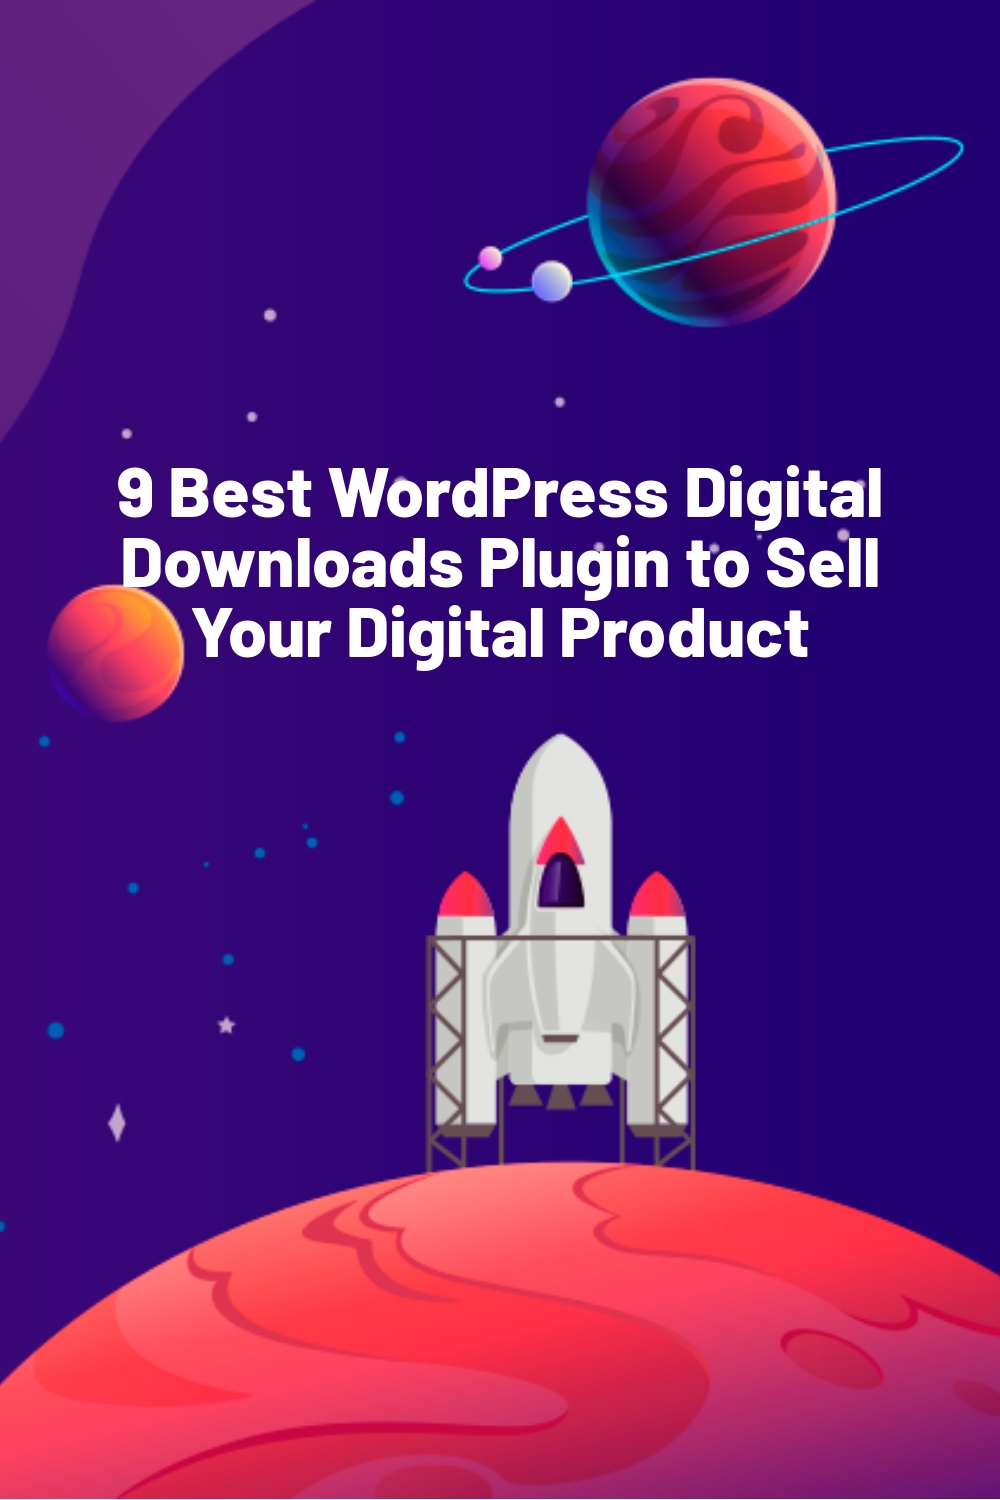 9 Best WordPress Digital Downloads Plugin to Sell Your Digital Product